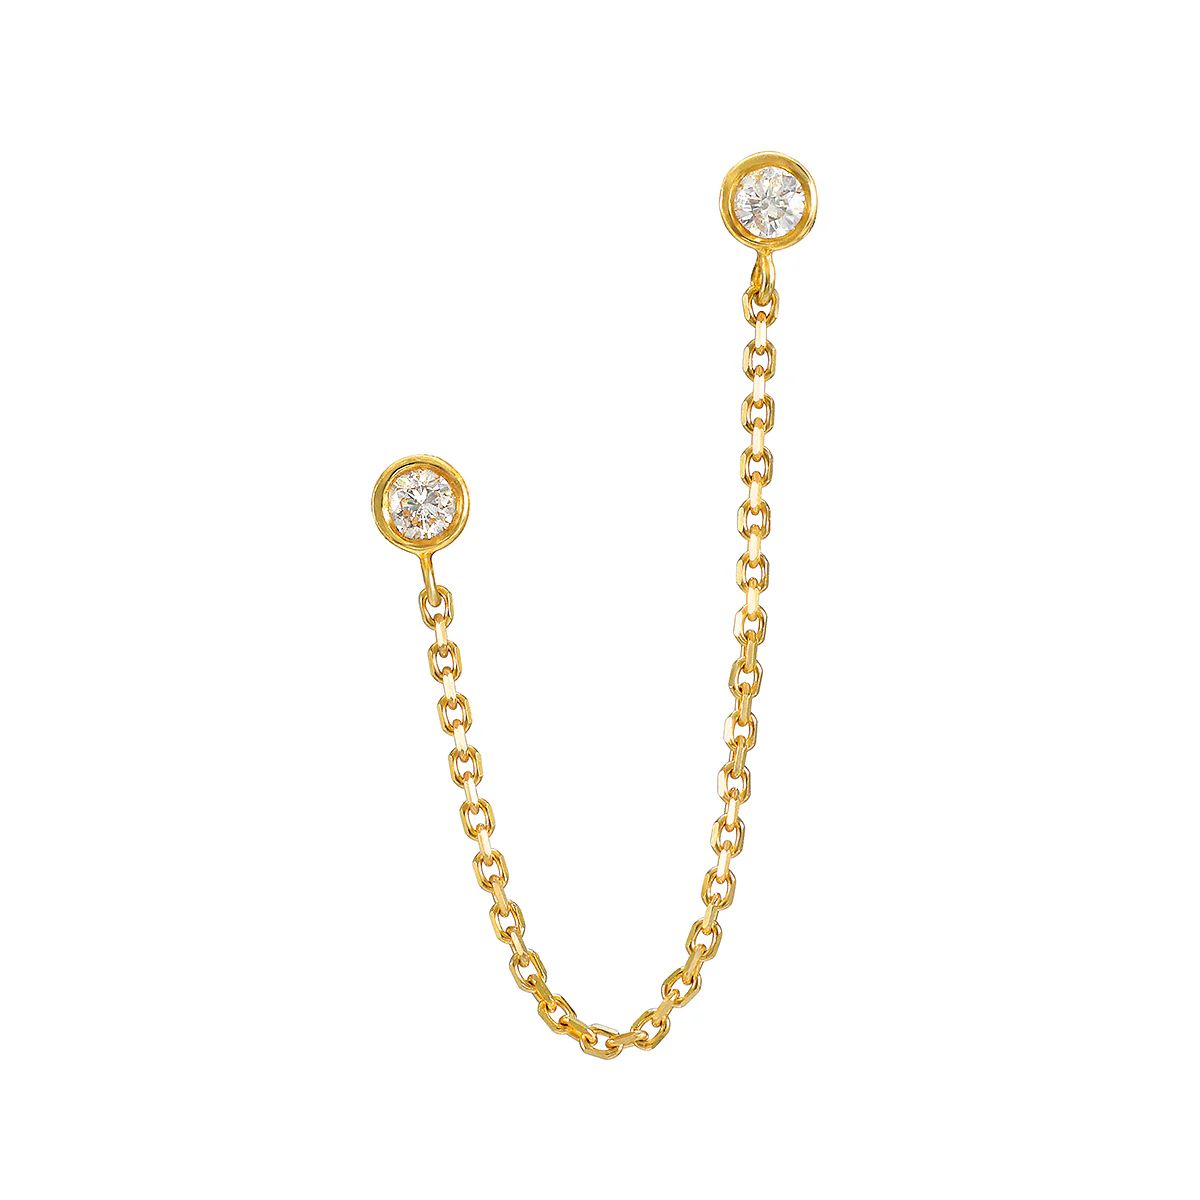 United by Light 14kt Gold Diamond Chain Earring | Satya Jewelry